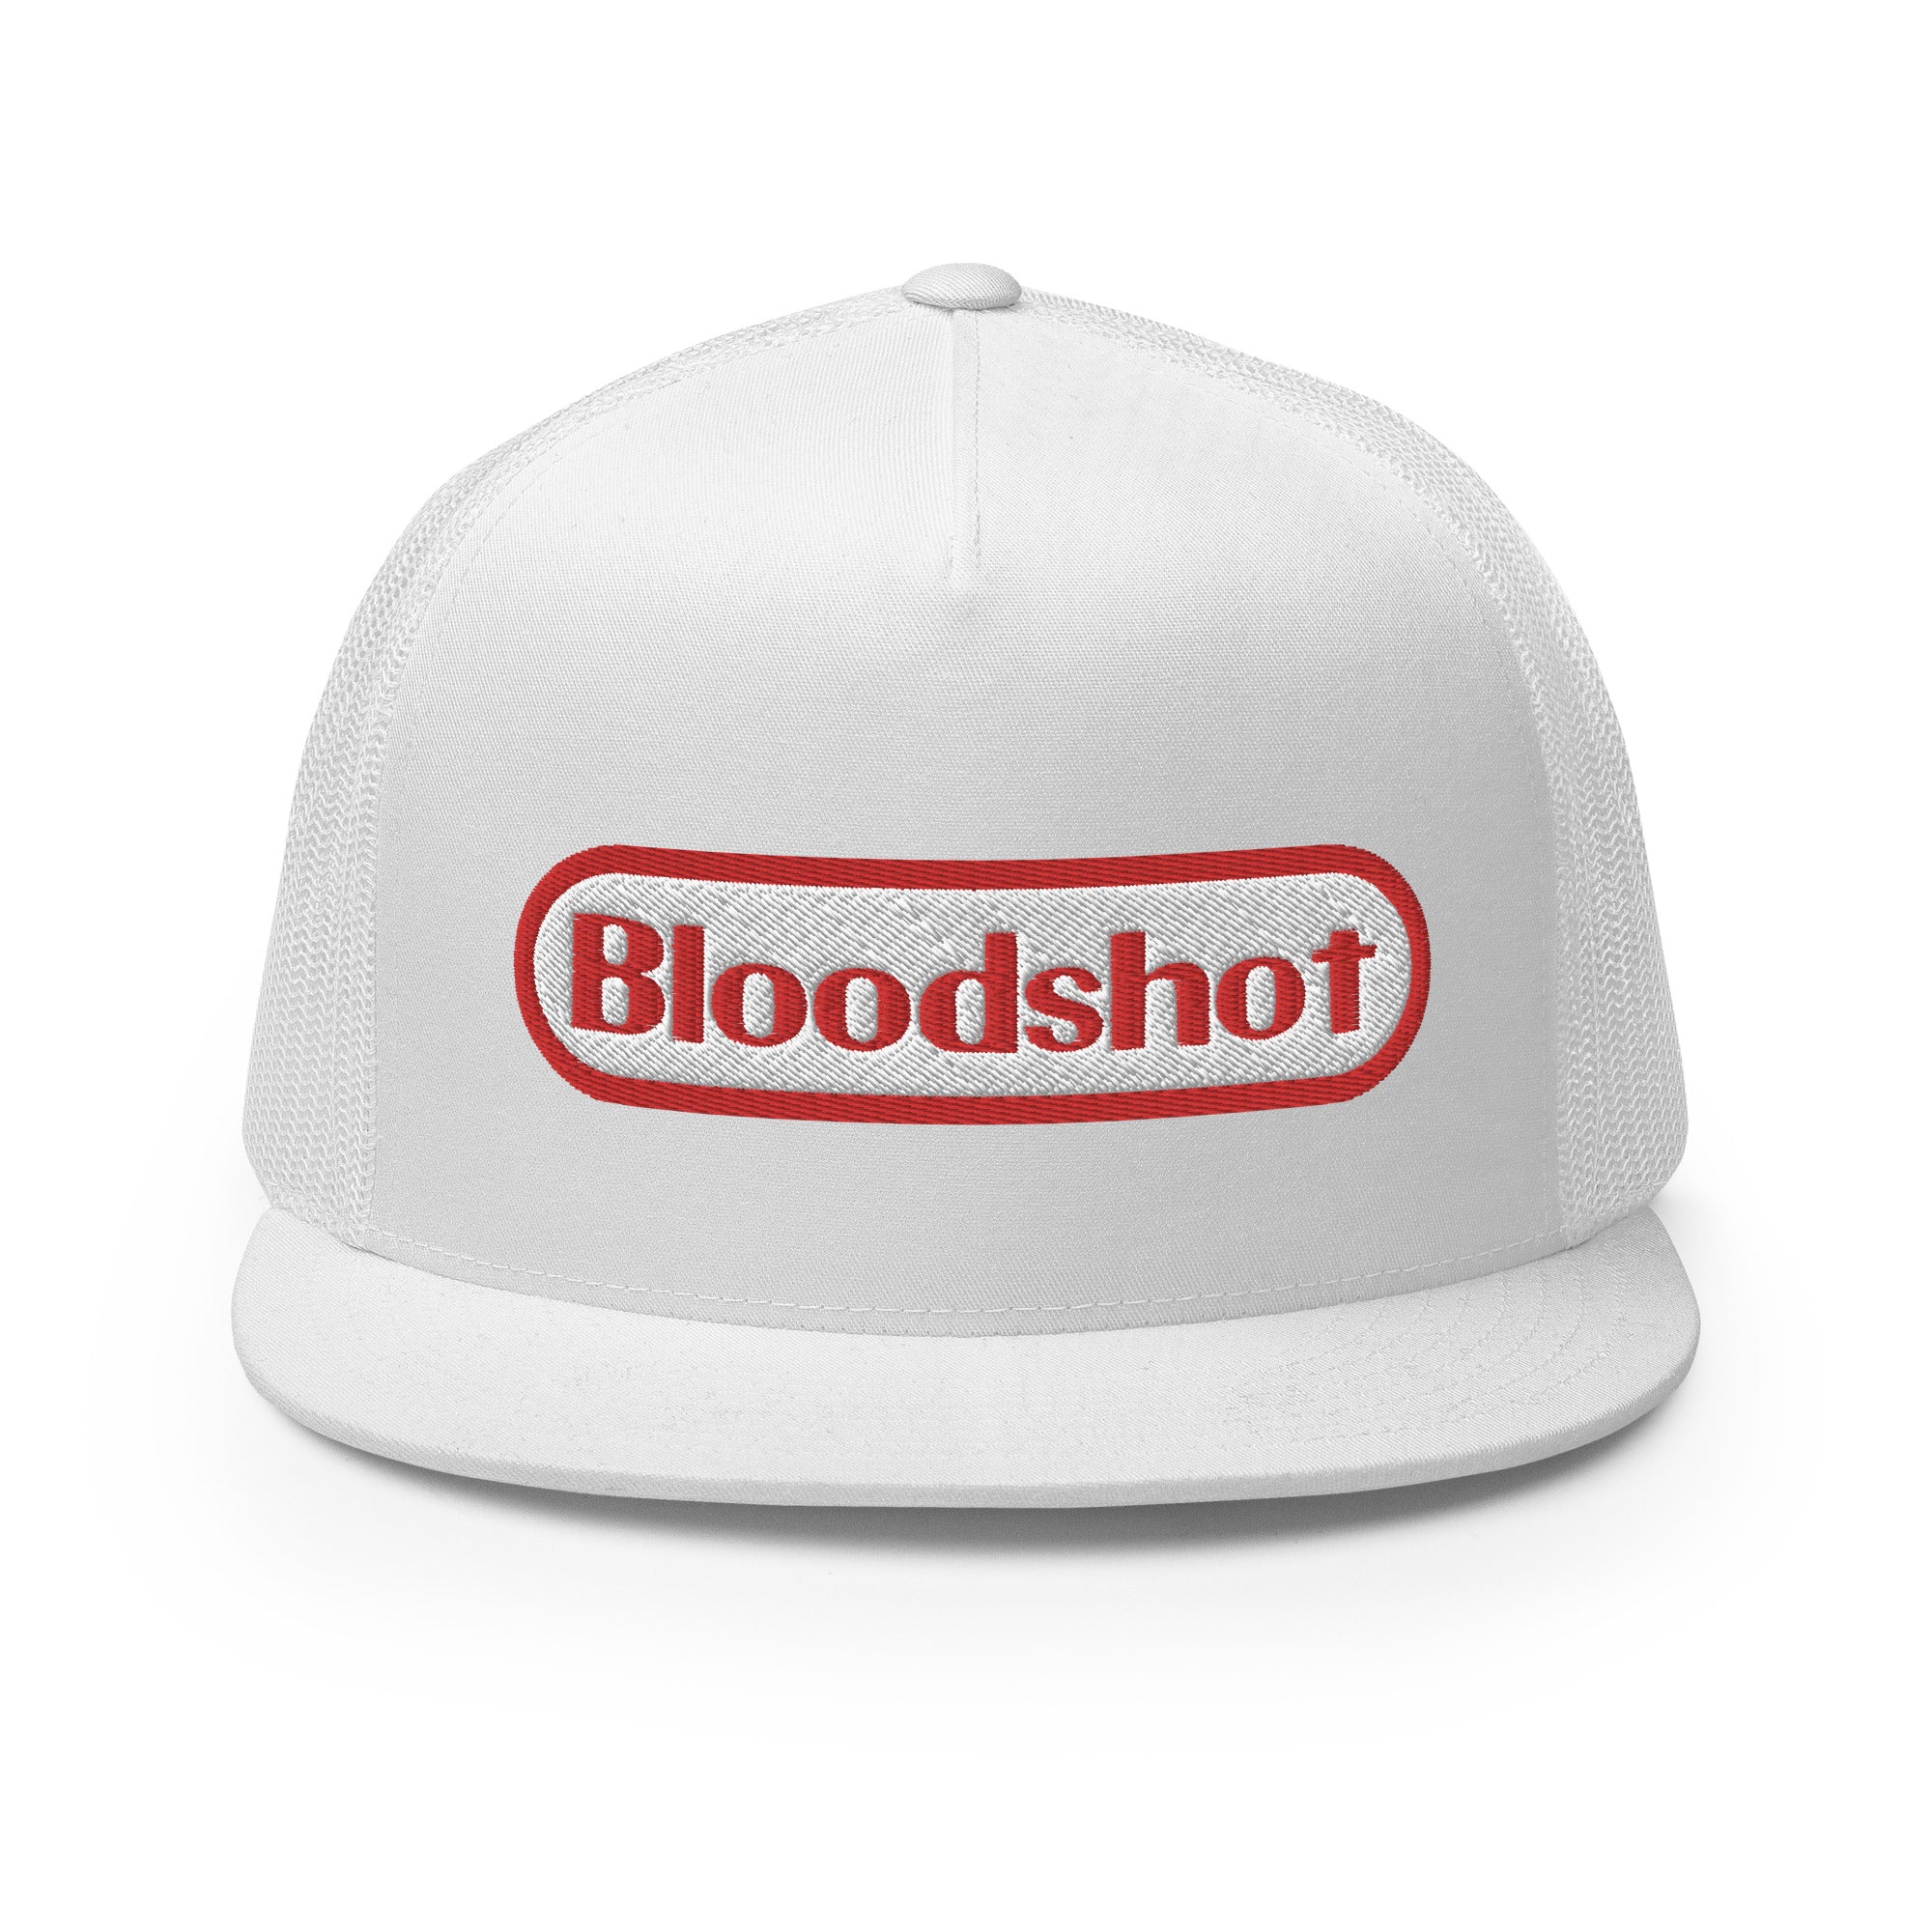 Bloodshot - Trucker Cap